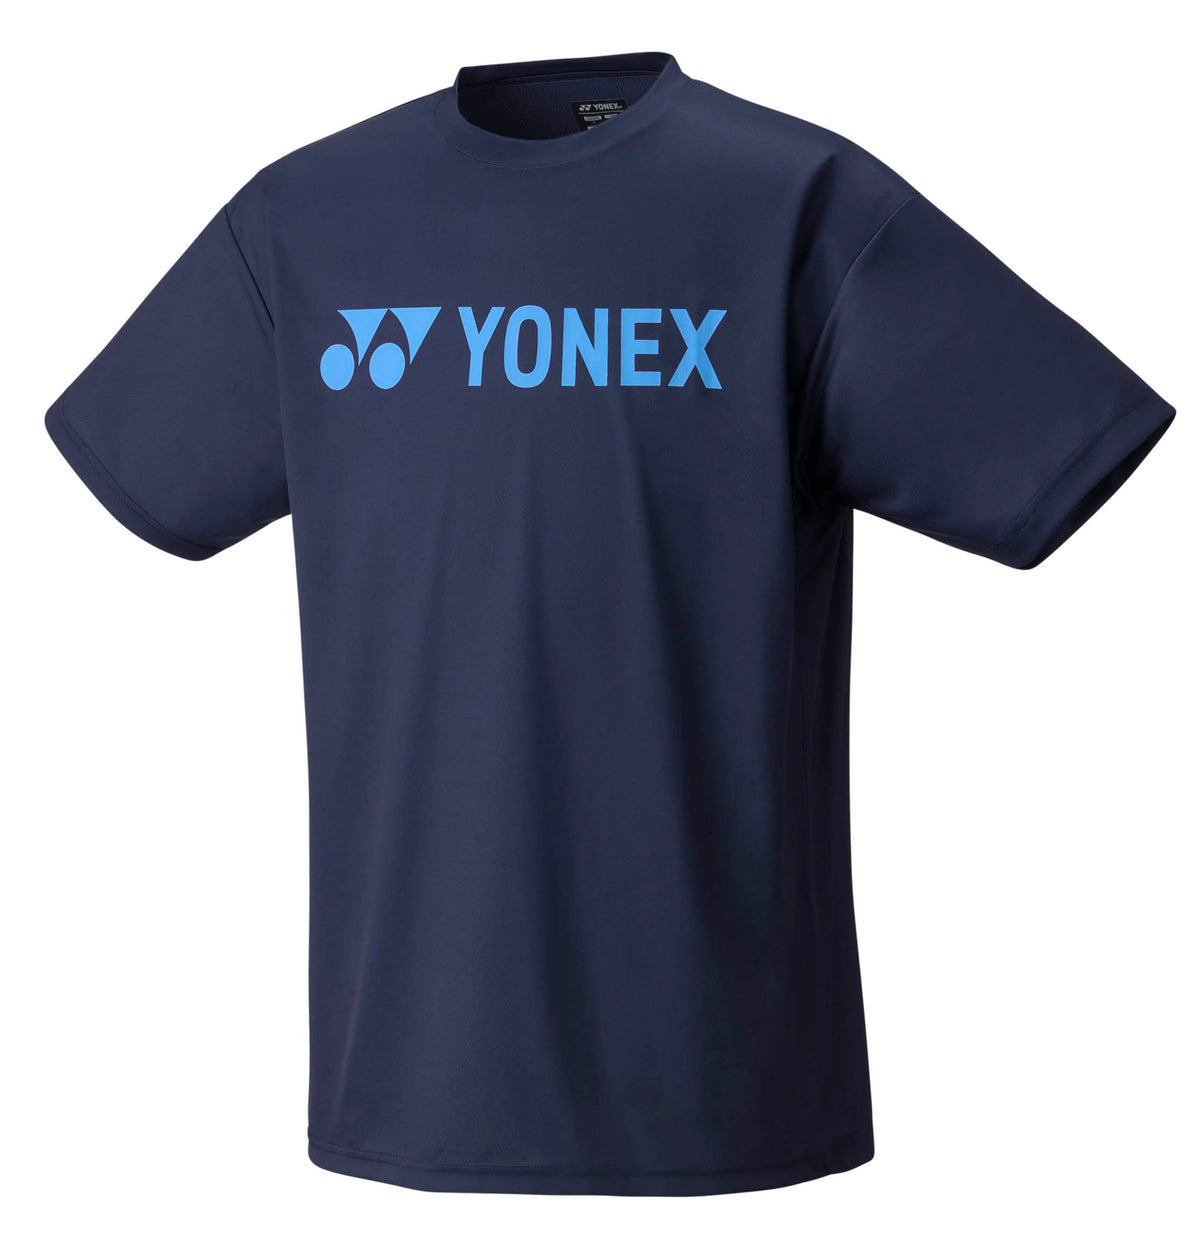 Yonex Unisex Shirt marine